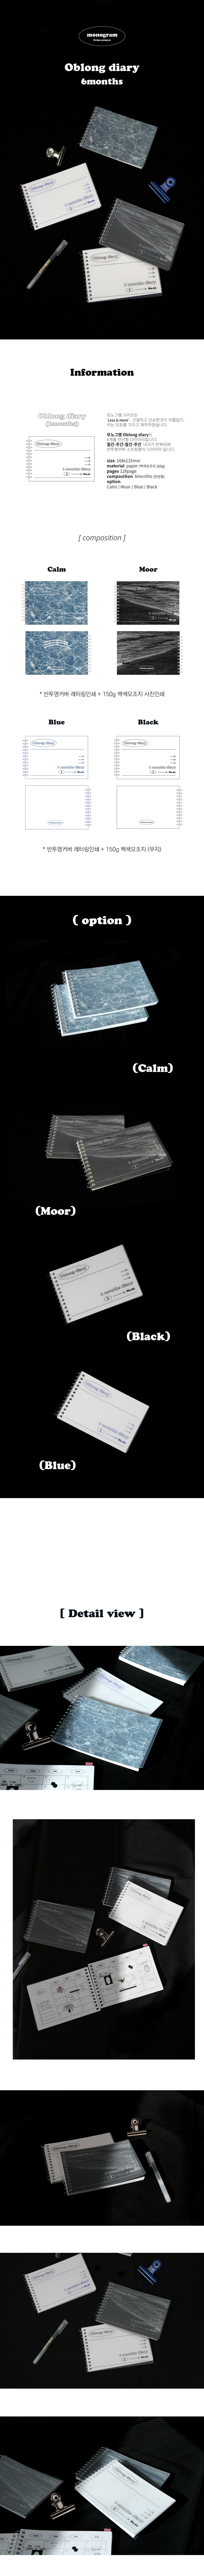 monogram oblong diary (6months) 5,500원 - 디자인곰곰 디자인문구, 다이어리/캘린더, 만년형, 포토 바보사랑 monogram oblong diary (6months) 5,500원 - 디자인곰곰 디자인문구, 다이어리/캘린더, 만년형, 포토 바보사랑